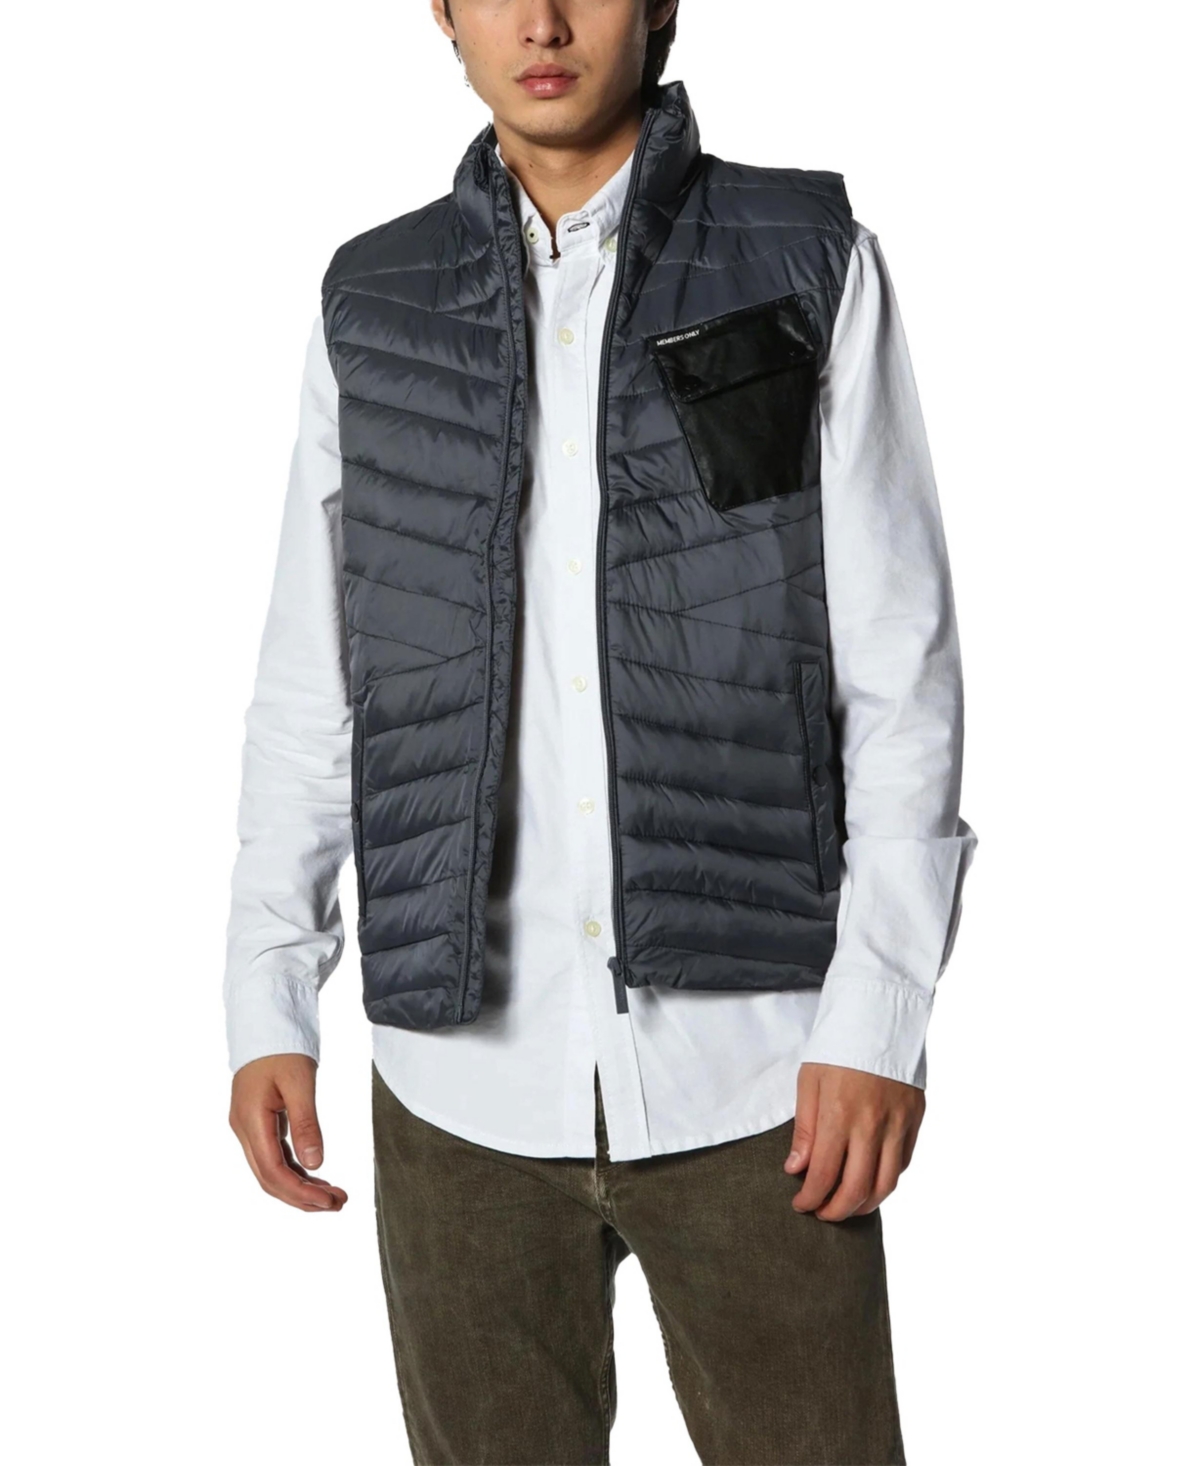 Men's Puffer Vest Jacket - Charcoal